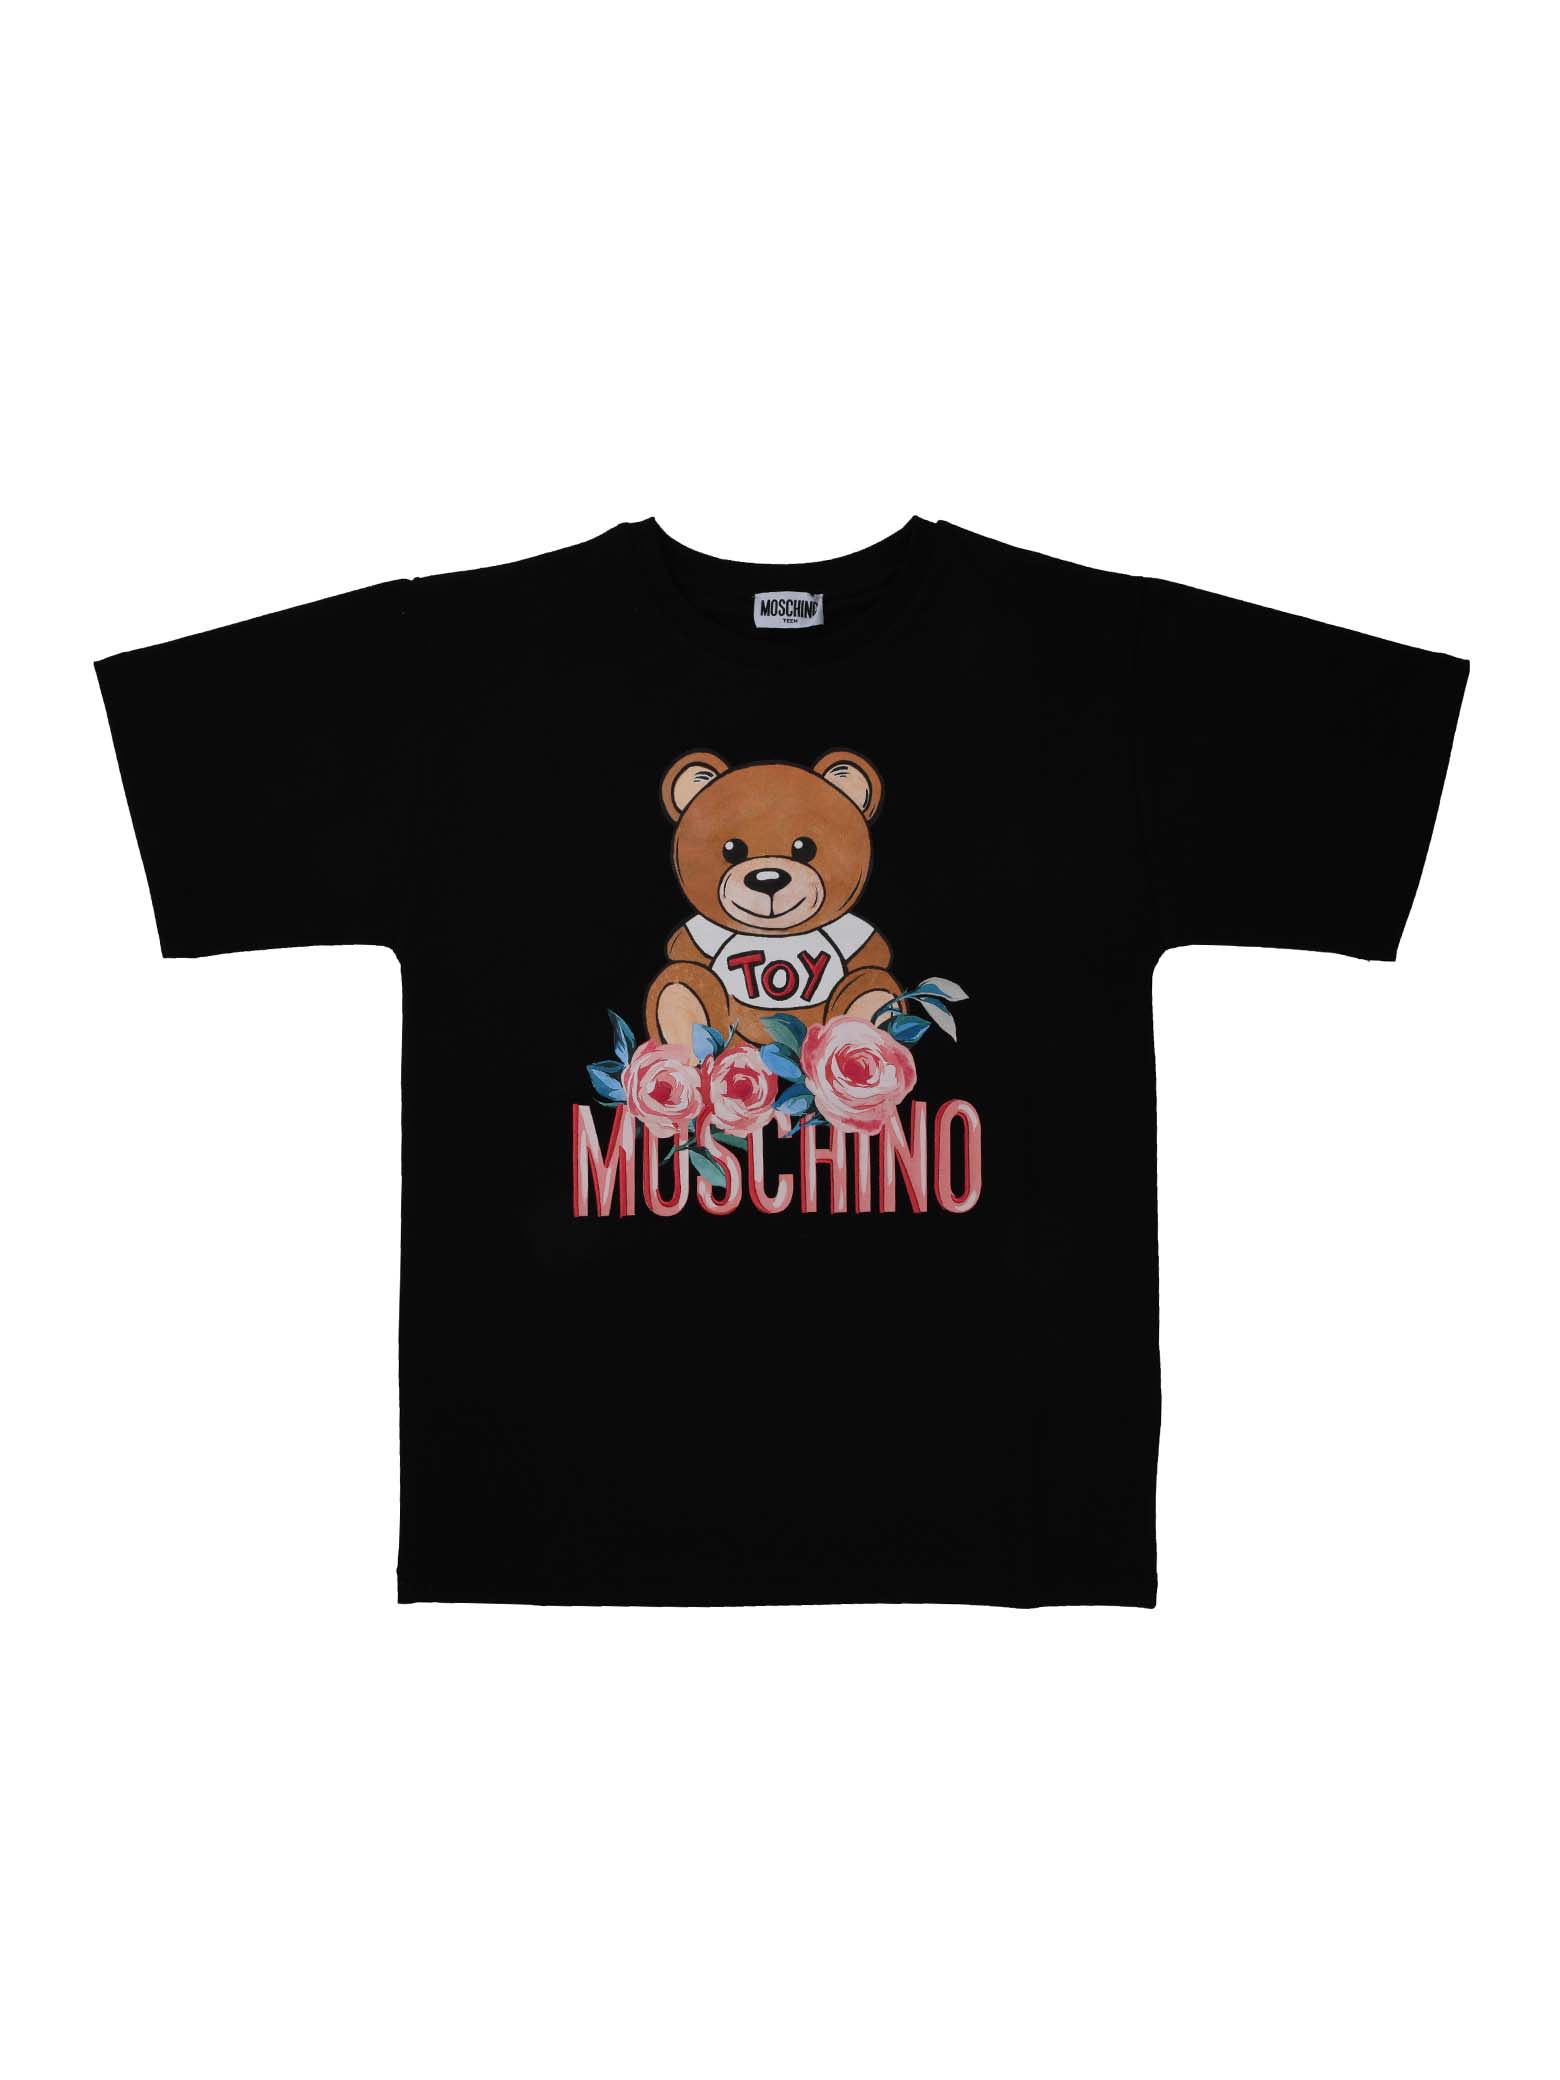 Moschino Maxi Black T Shirt Short Sleeve With Print